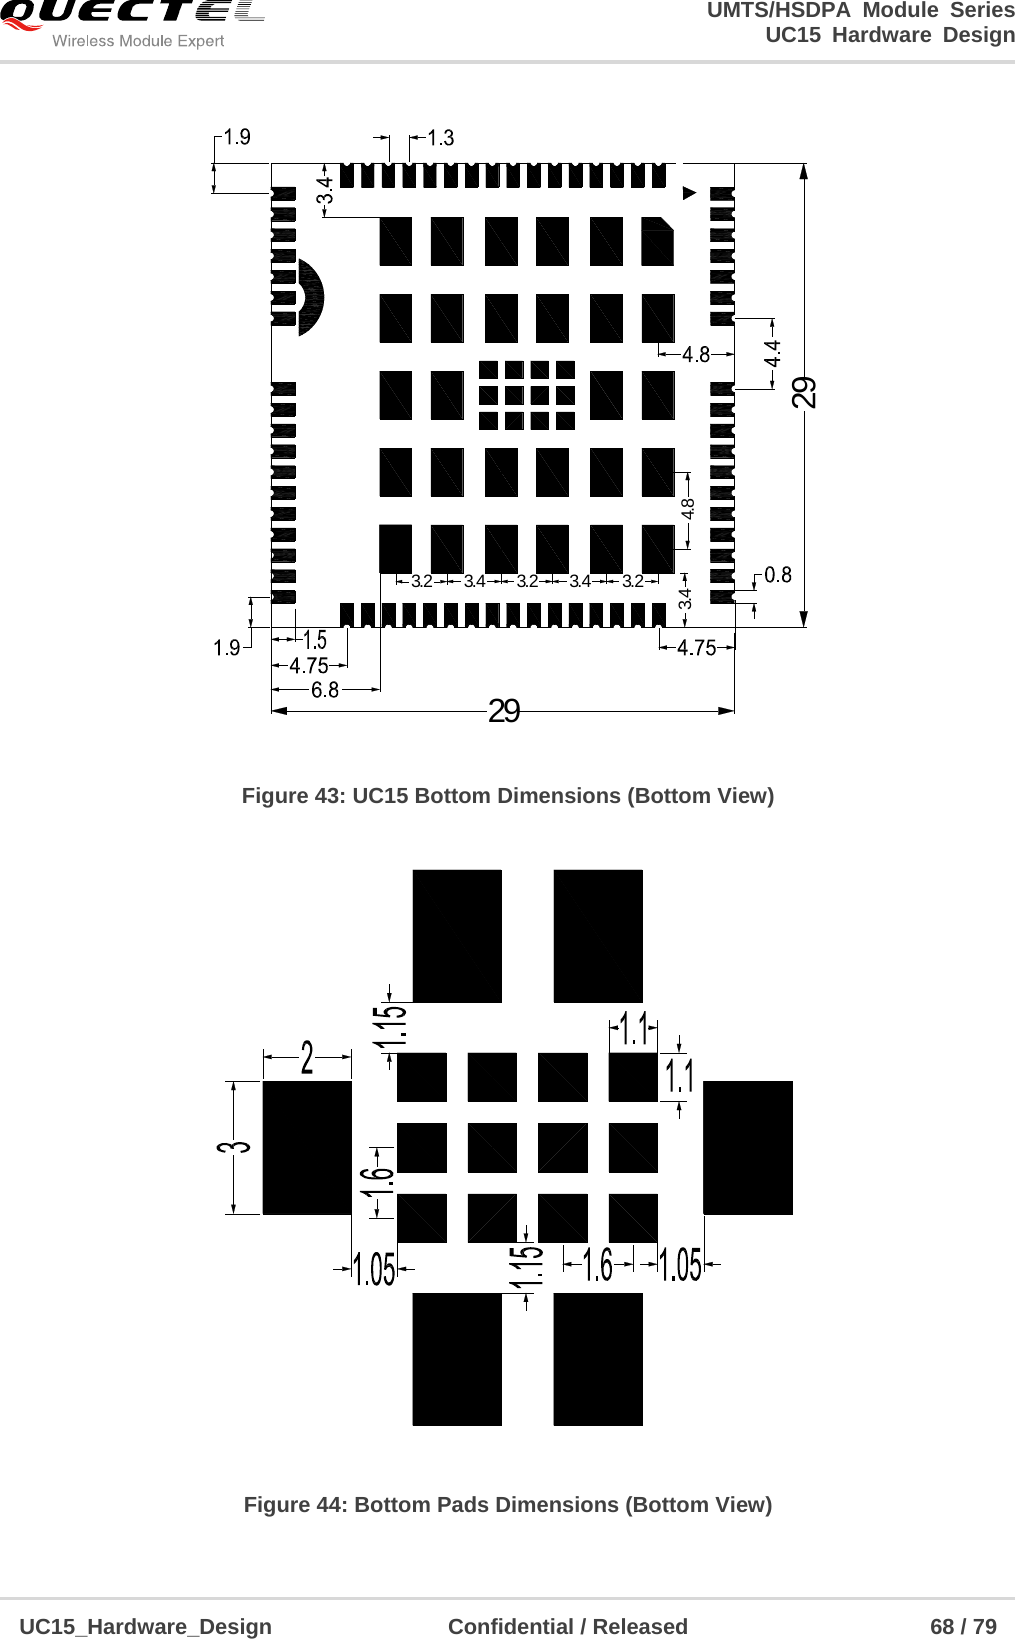                                                                        UMTS/HSDPA Module Series                                                                 UC15 Hardware Design  UC15_Hardware_Design                Confidential / Released                      68 / 79    29294.83.23.43.23.43.23.4 Figure 43: UC15 Bottom Dimensions (Bottom View)  Figure 44: Bottom Pads Dimensions (Bottom View) 